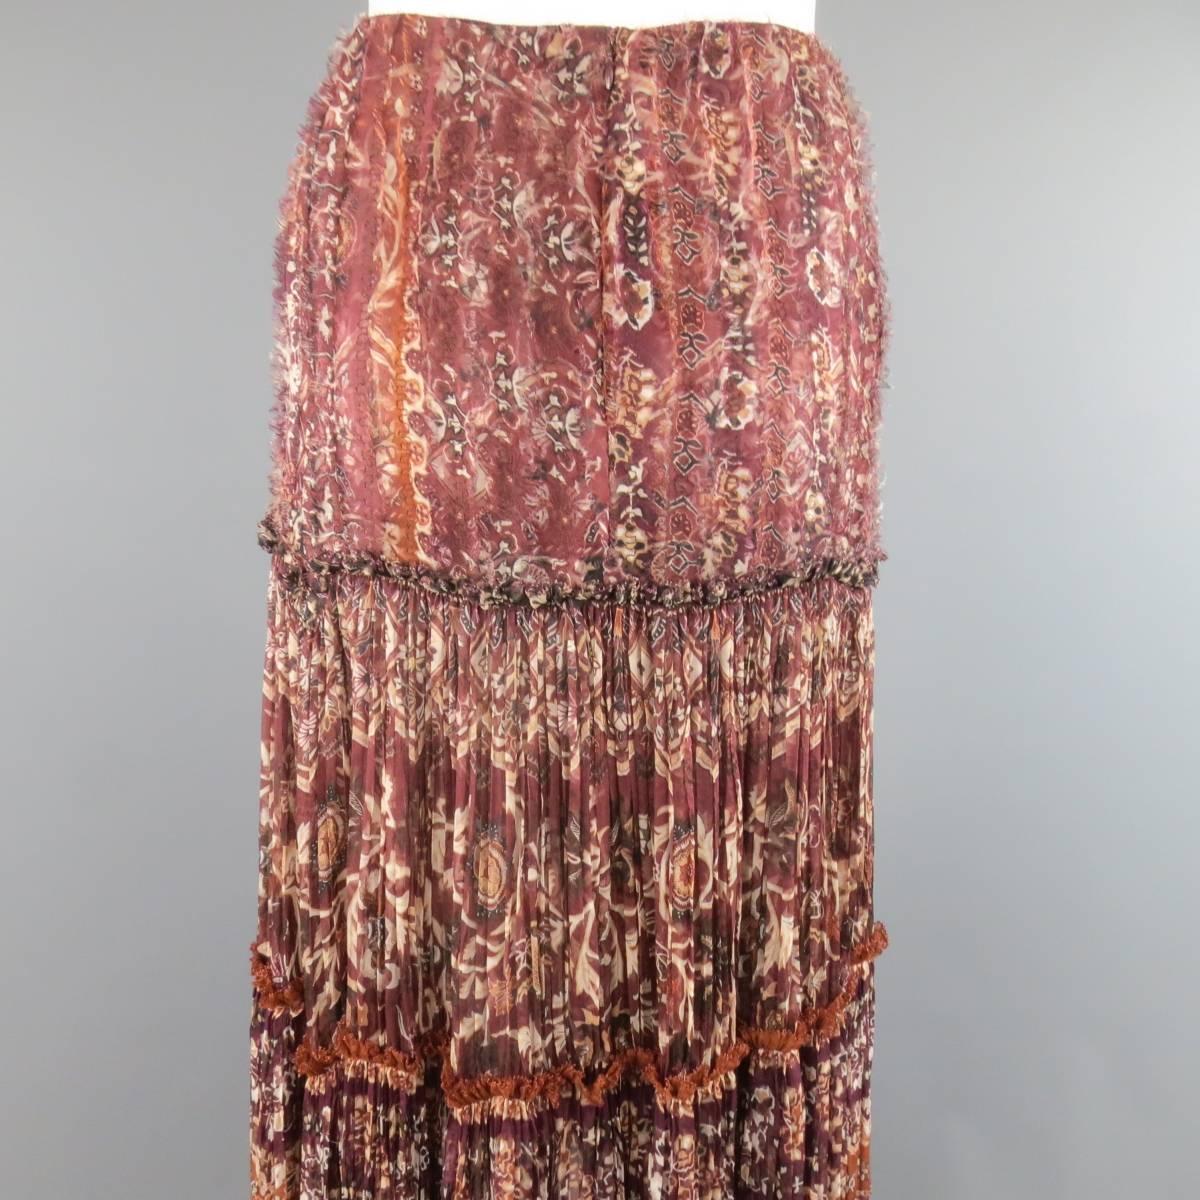 OSCAR DE LA RENTA Skirt - Size 8 Burgundy Floral Textured Silk Boho Maxi Skirt 3